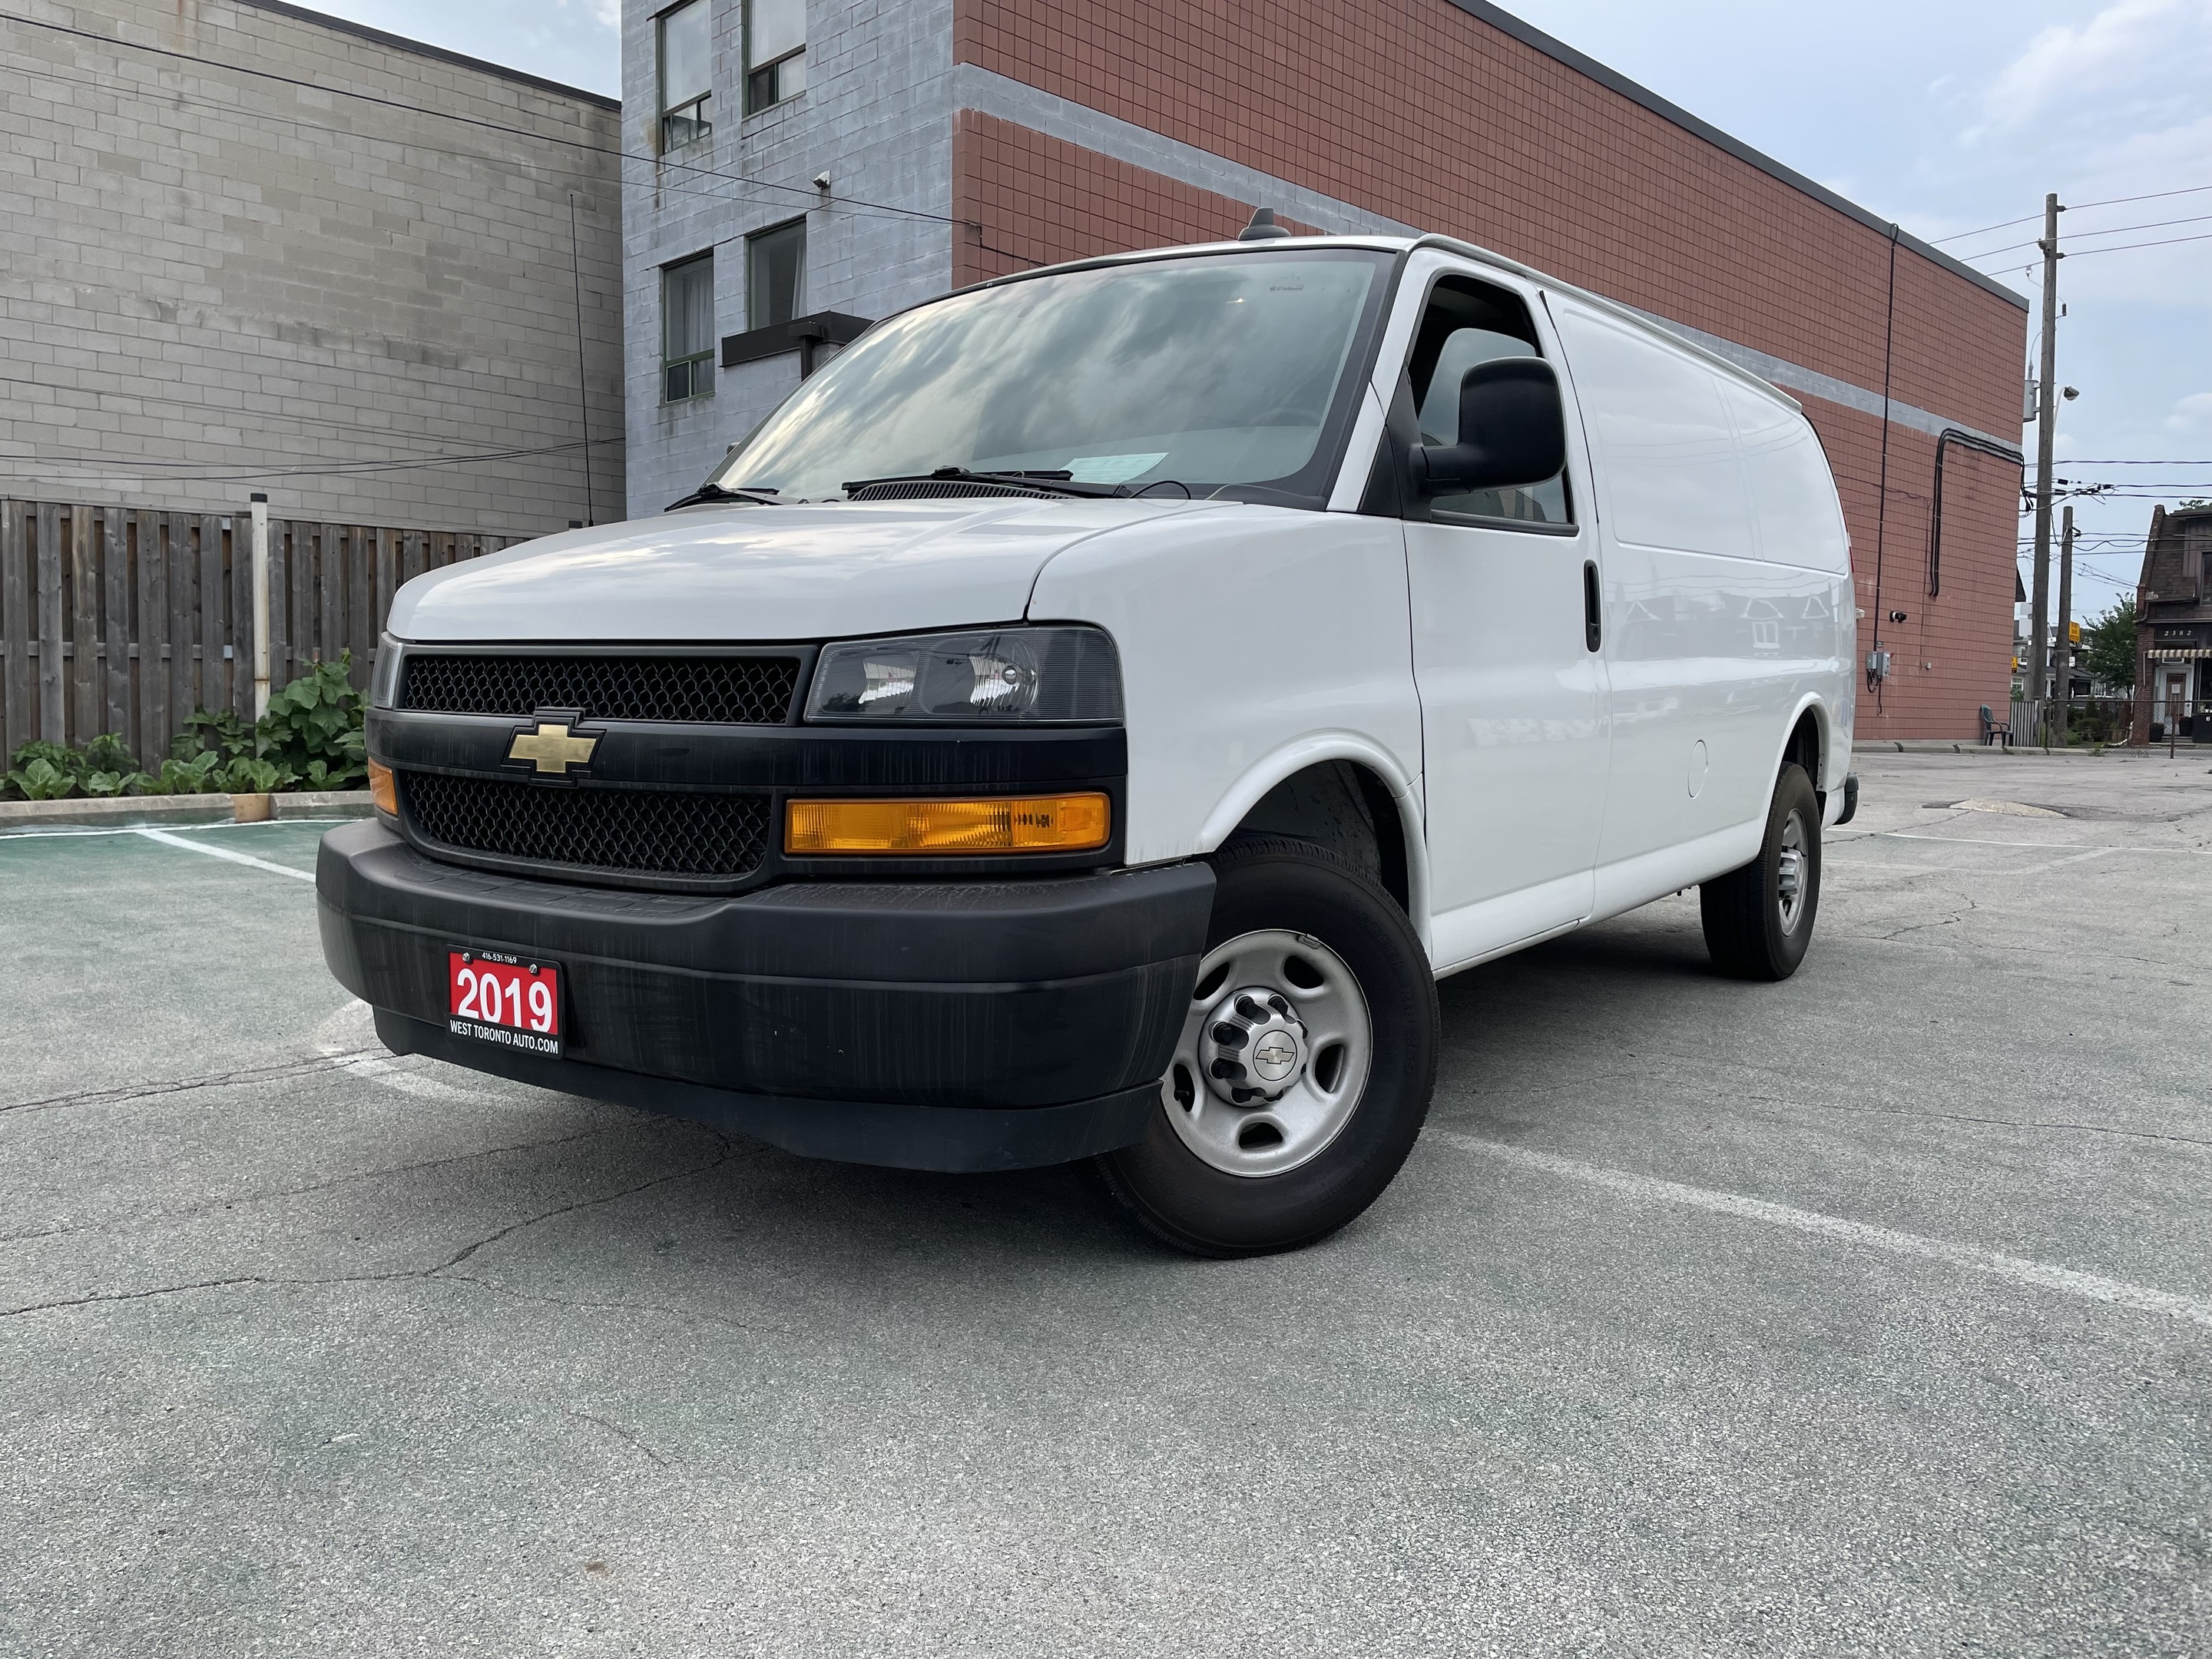 2019 Chevrolet Express 2500 2500 / 3/4 TON / FACTORY WARRANTY 57902 KMS 